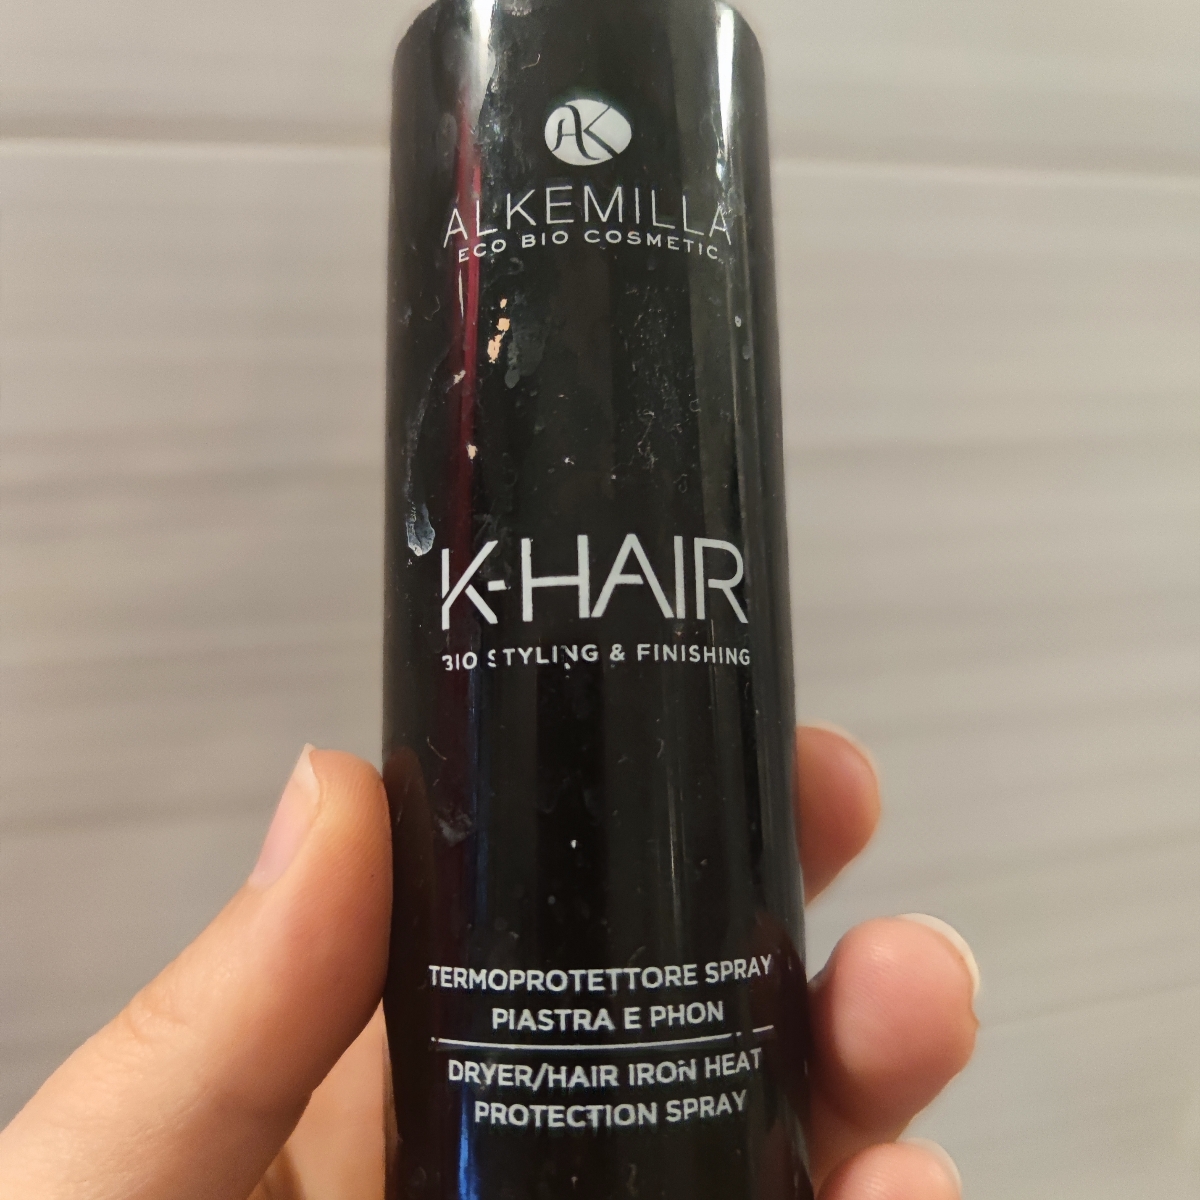 K-hair - Spray termoprotettore - Alkemilla